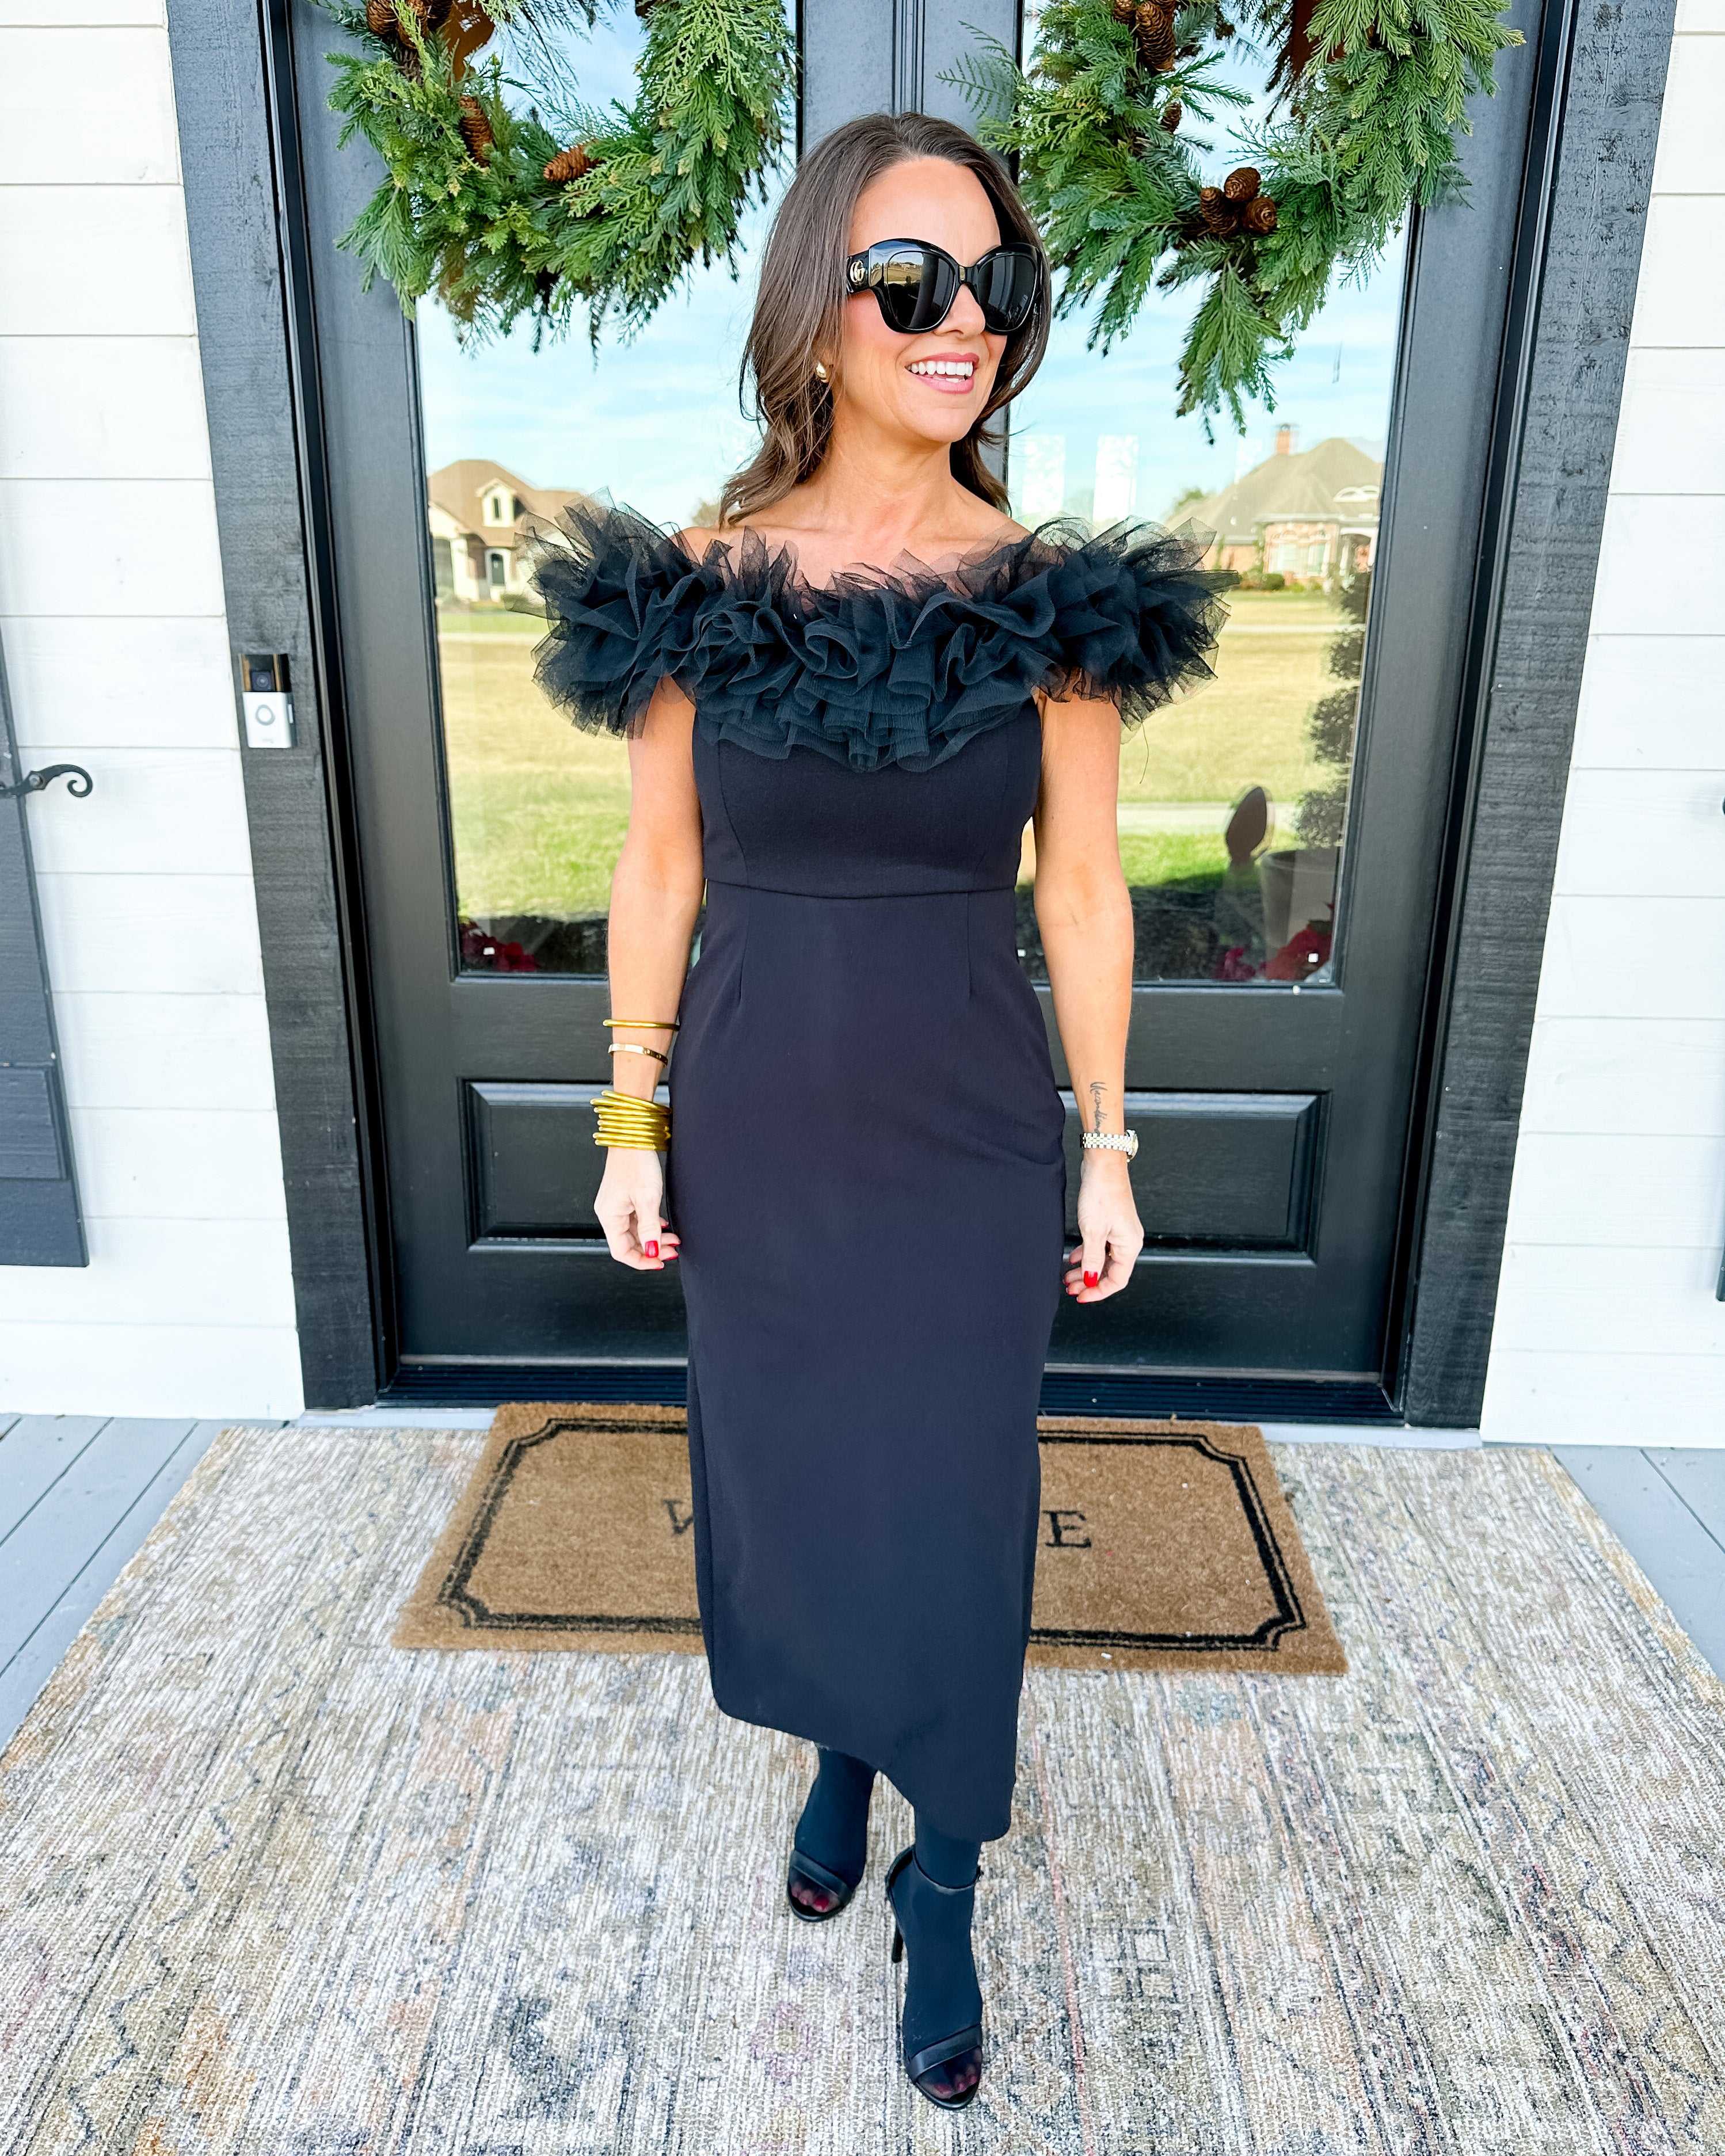 Black Off-The-Shoulder Midi Dress